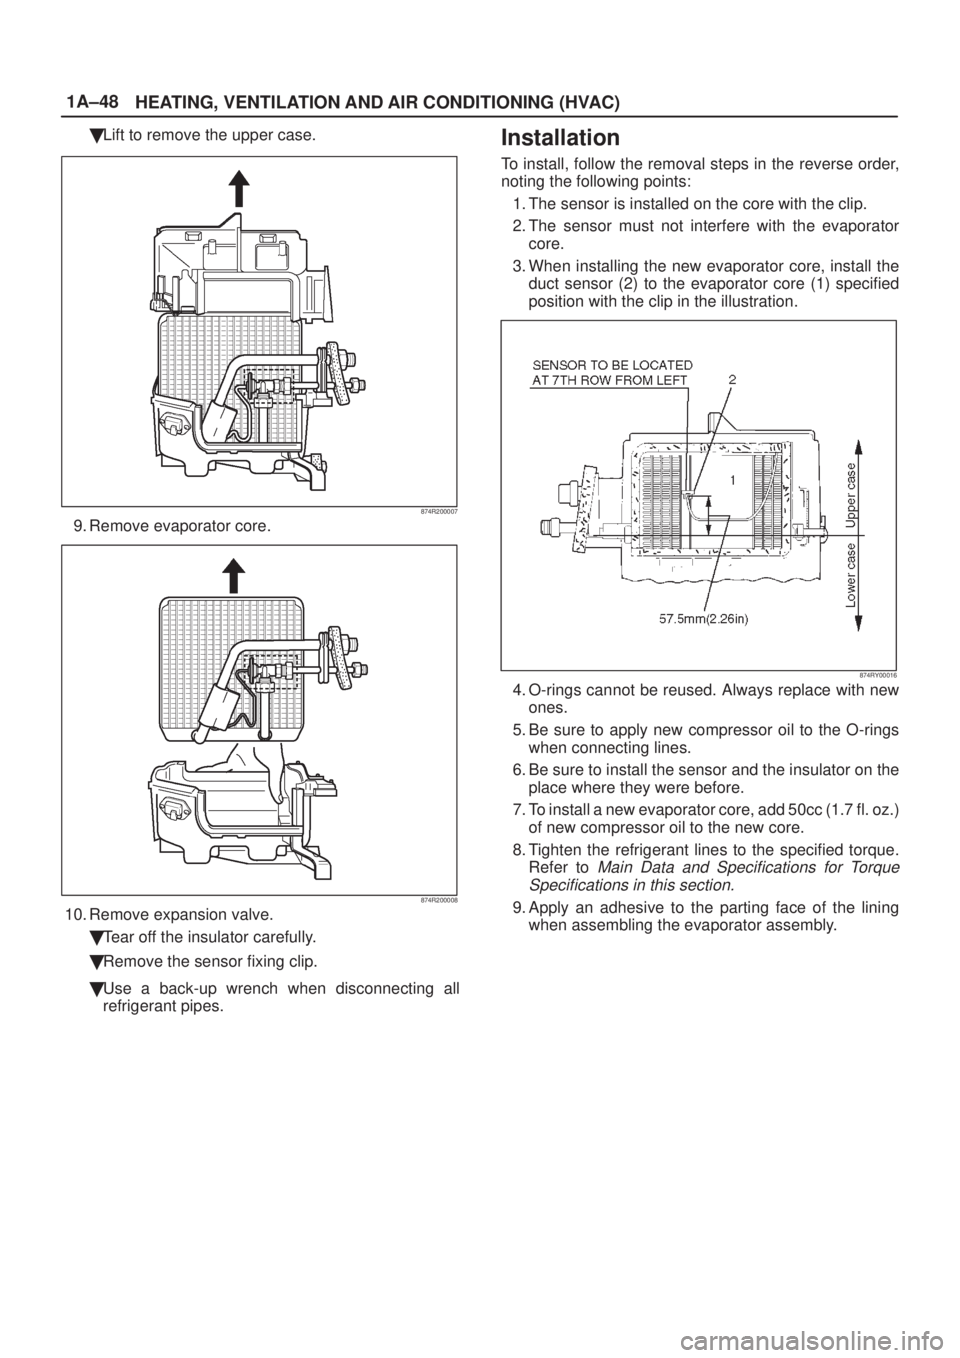 ISUZU AXIOM 2002  Service Manual PDF 1A±48
HEATING, VENTILATION AND AIR CONDITIONING (HVAC)
Lift to remove the upper case.
874R200007
9. Remove evaporator core.
874R200008
10. Remove expansion valve.
Tear off the insulator carefully.
